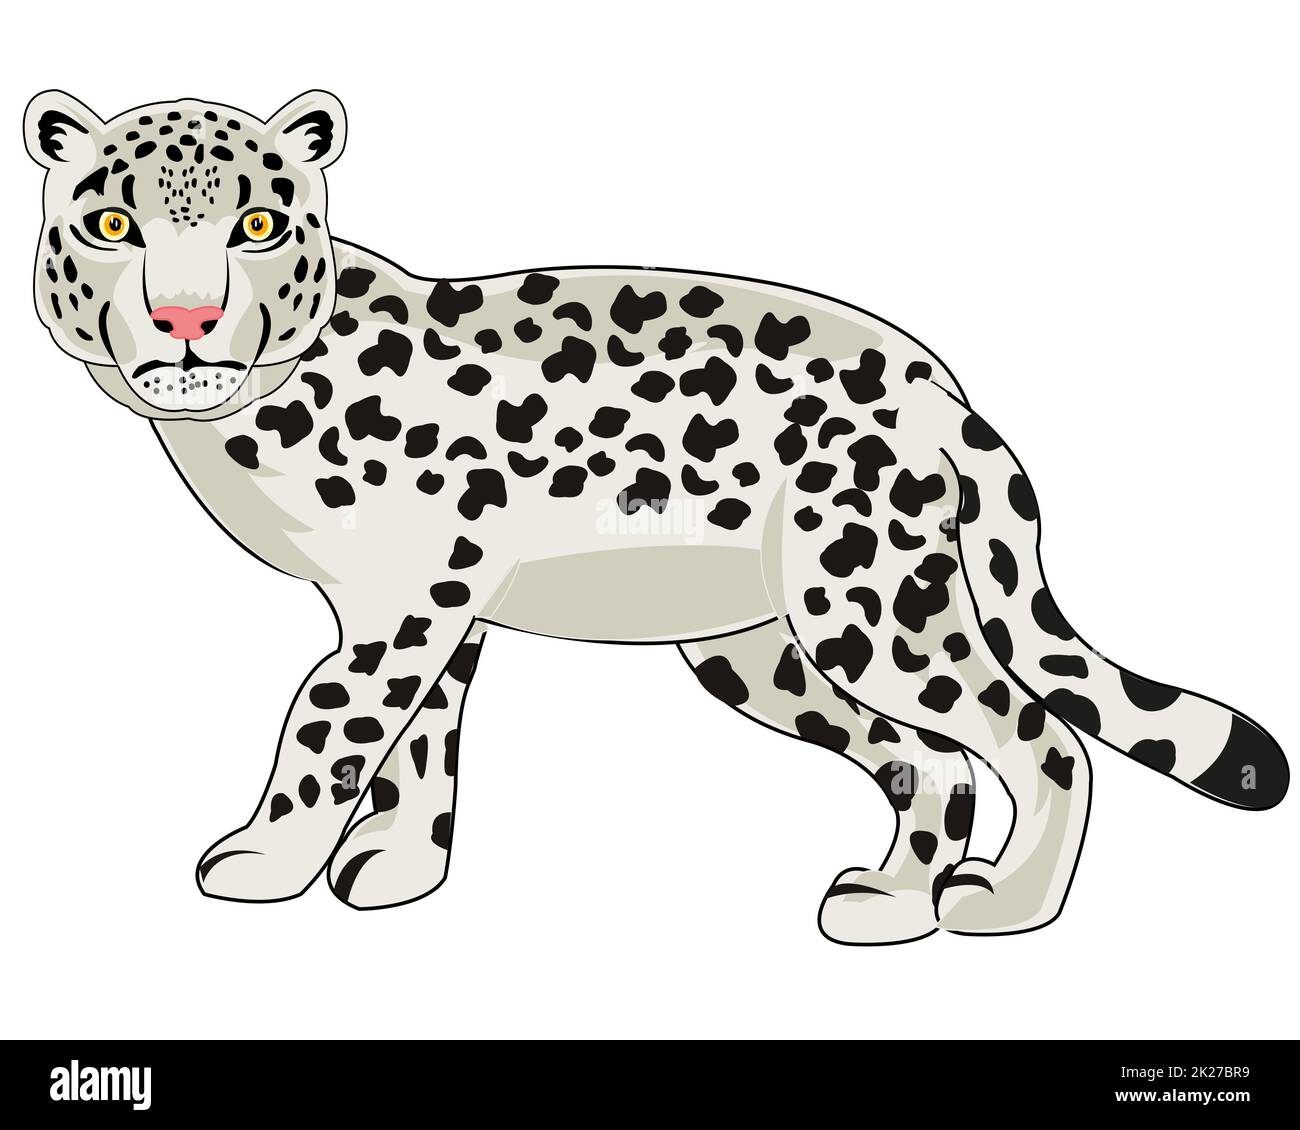 Snow snow leopard Cut Out Stock Images & Pictures - Alamy